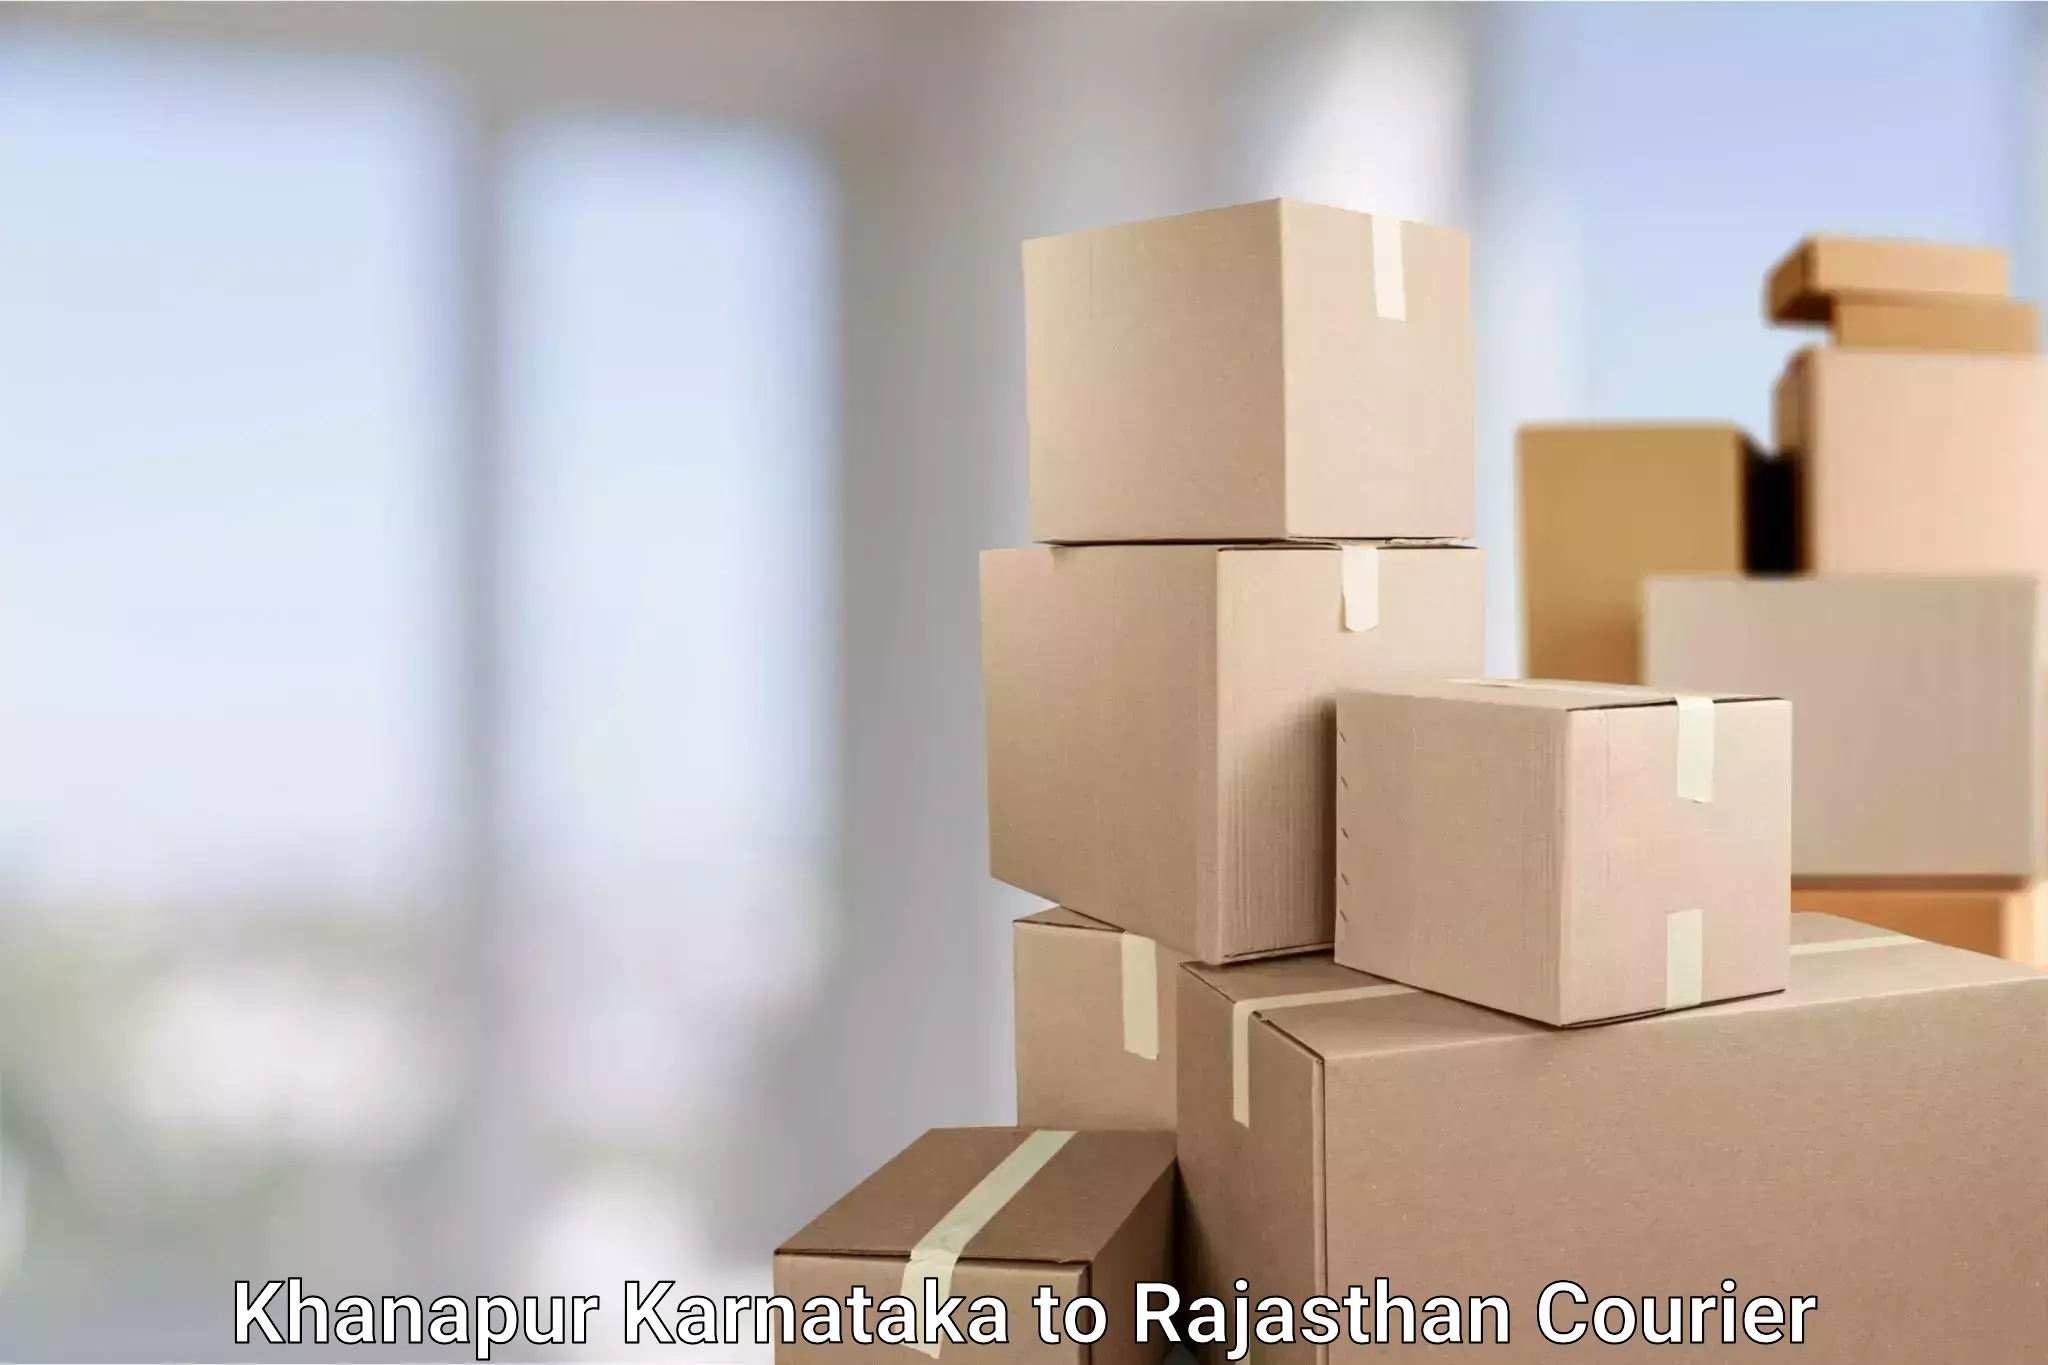 Small parcel delivery Khanapur Karnataka to Khanpur